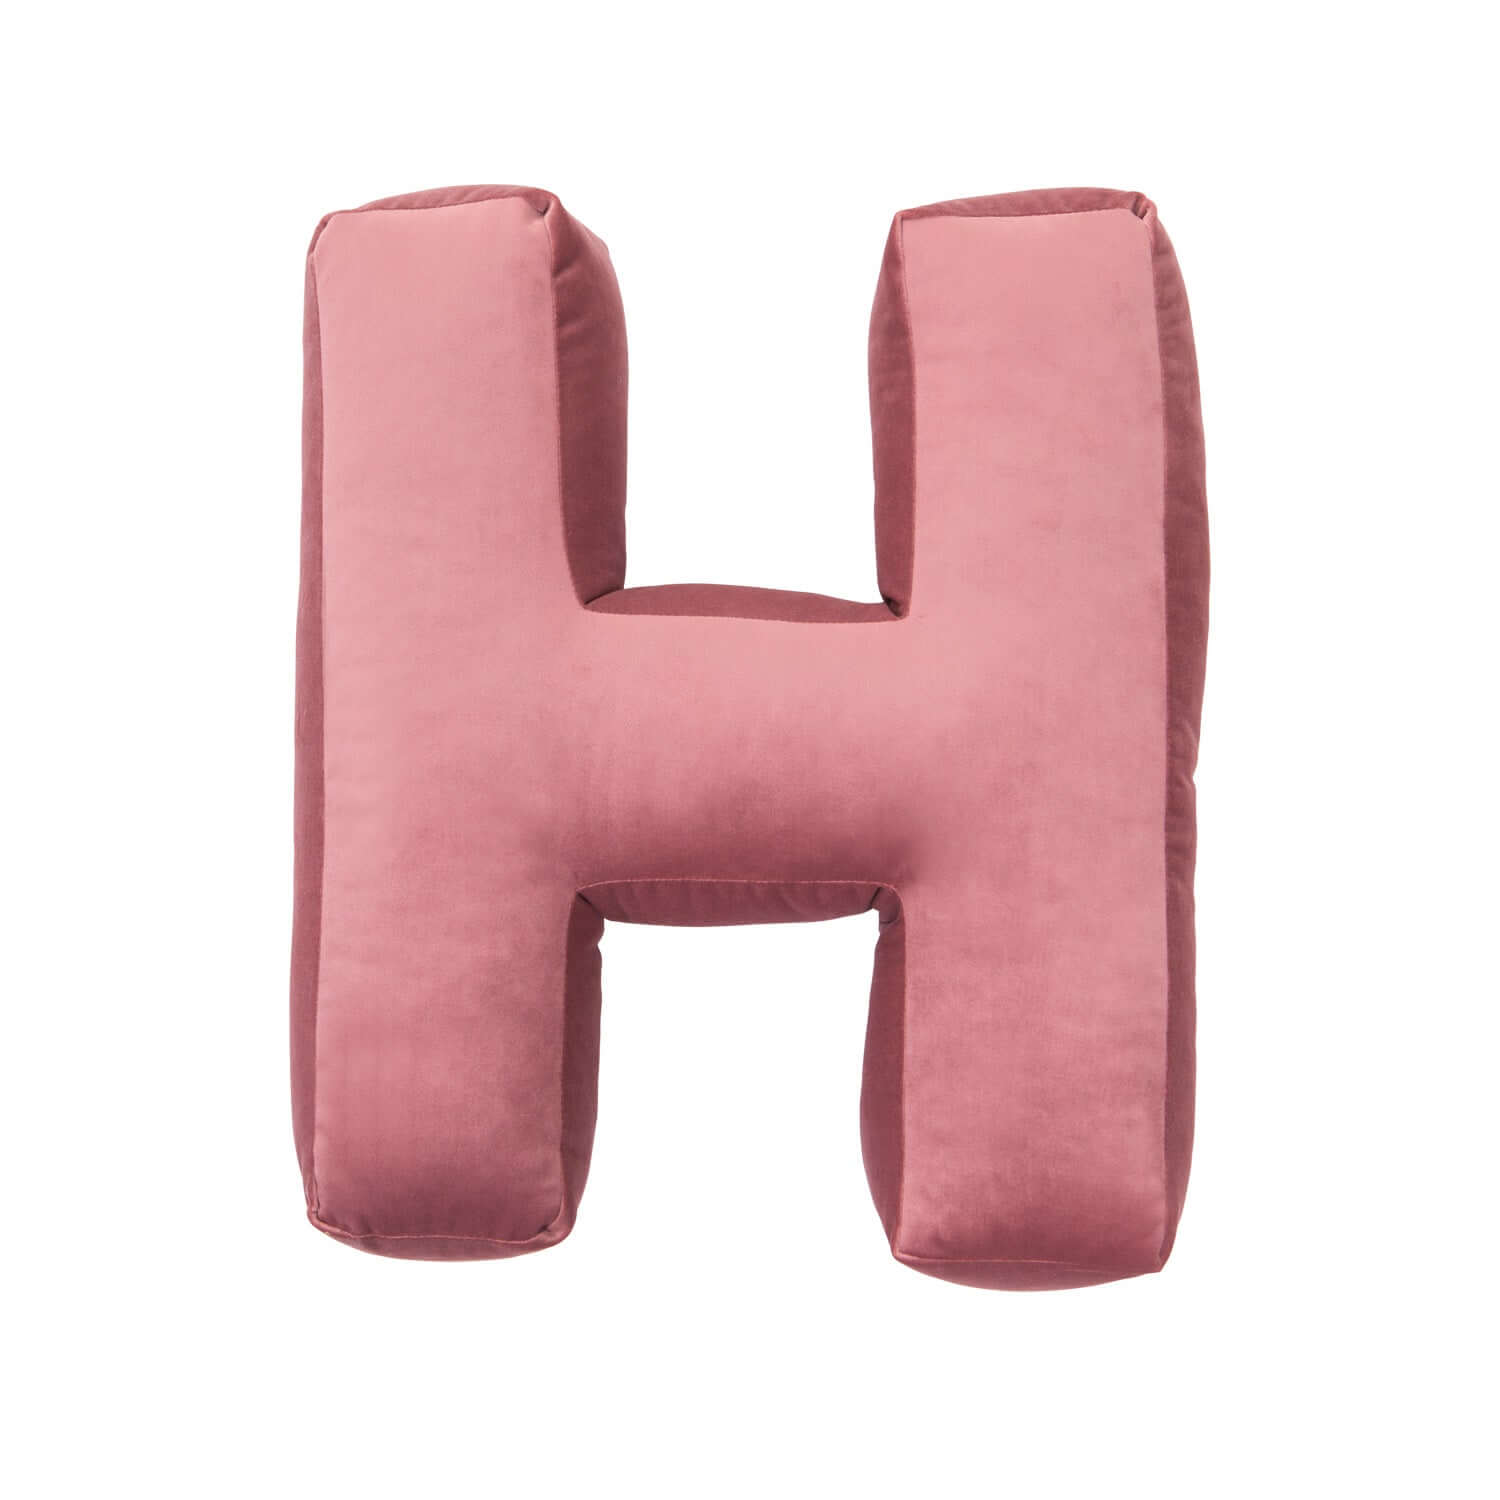 Poduszka literka welurowa H różowa od Bettys Home